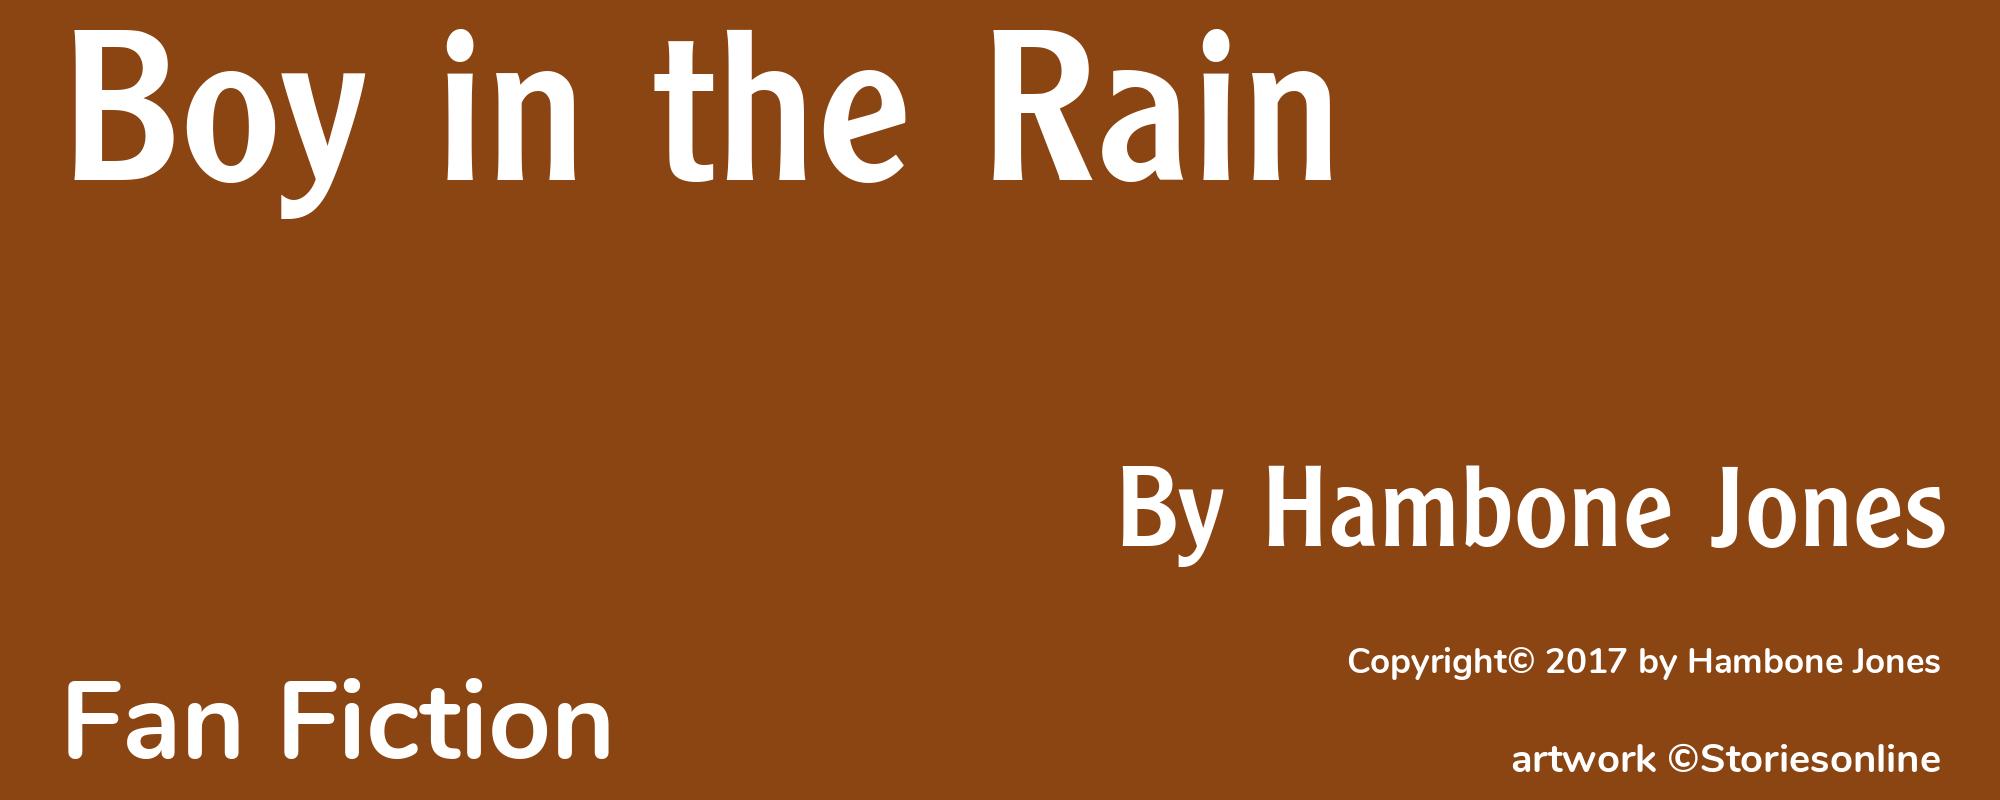 Boy in the Rain - Cover